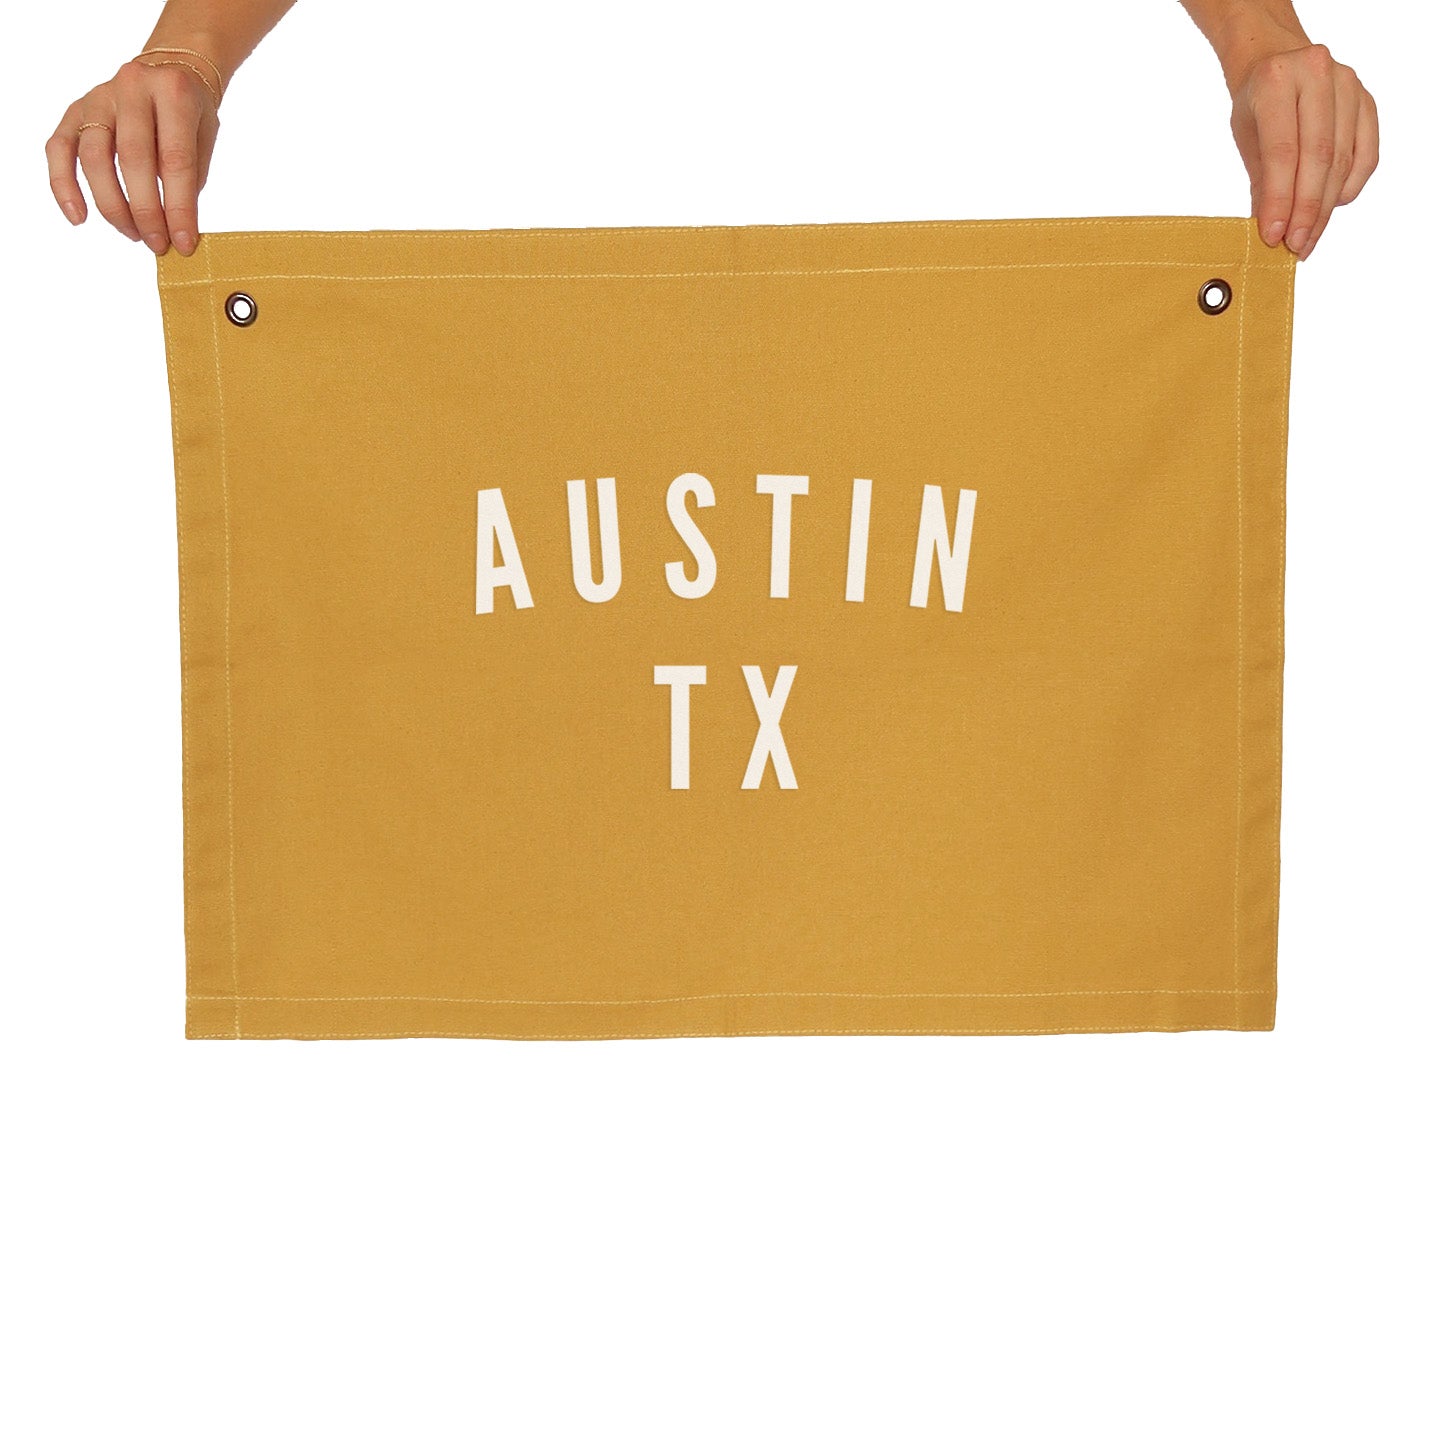 Austin TX Large Canvas Flag